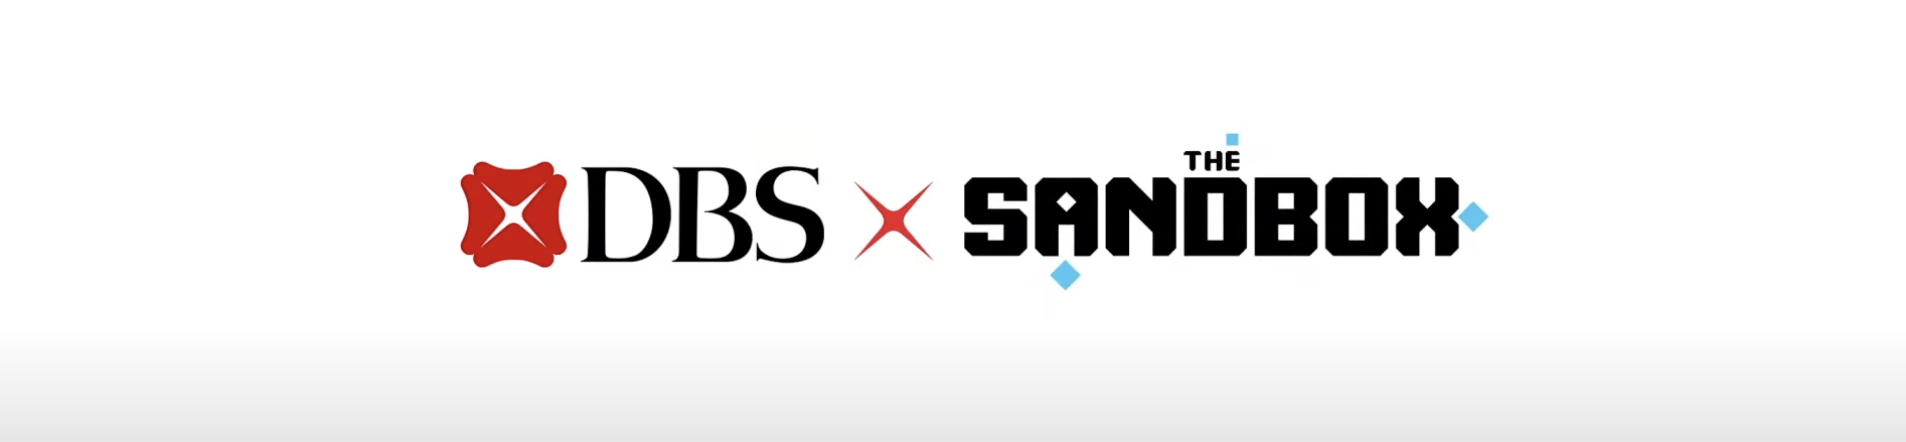 DBS partenaire de The Sandbox.